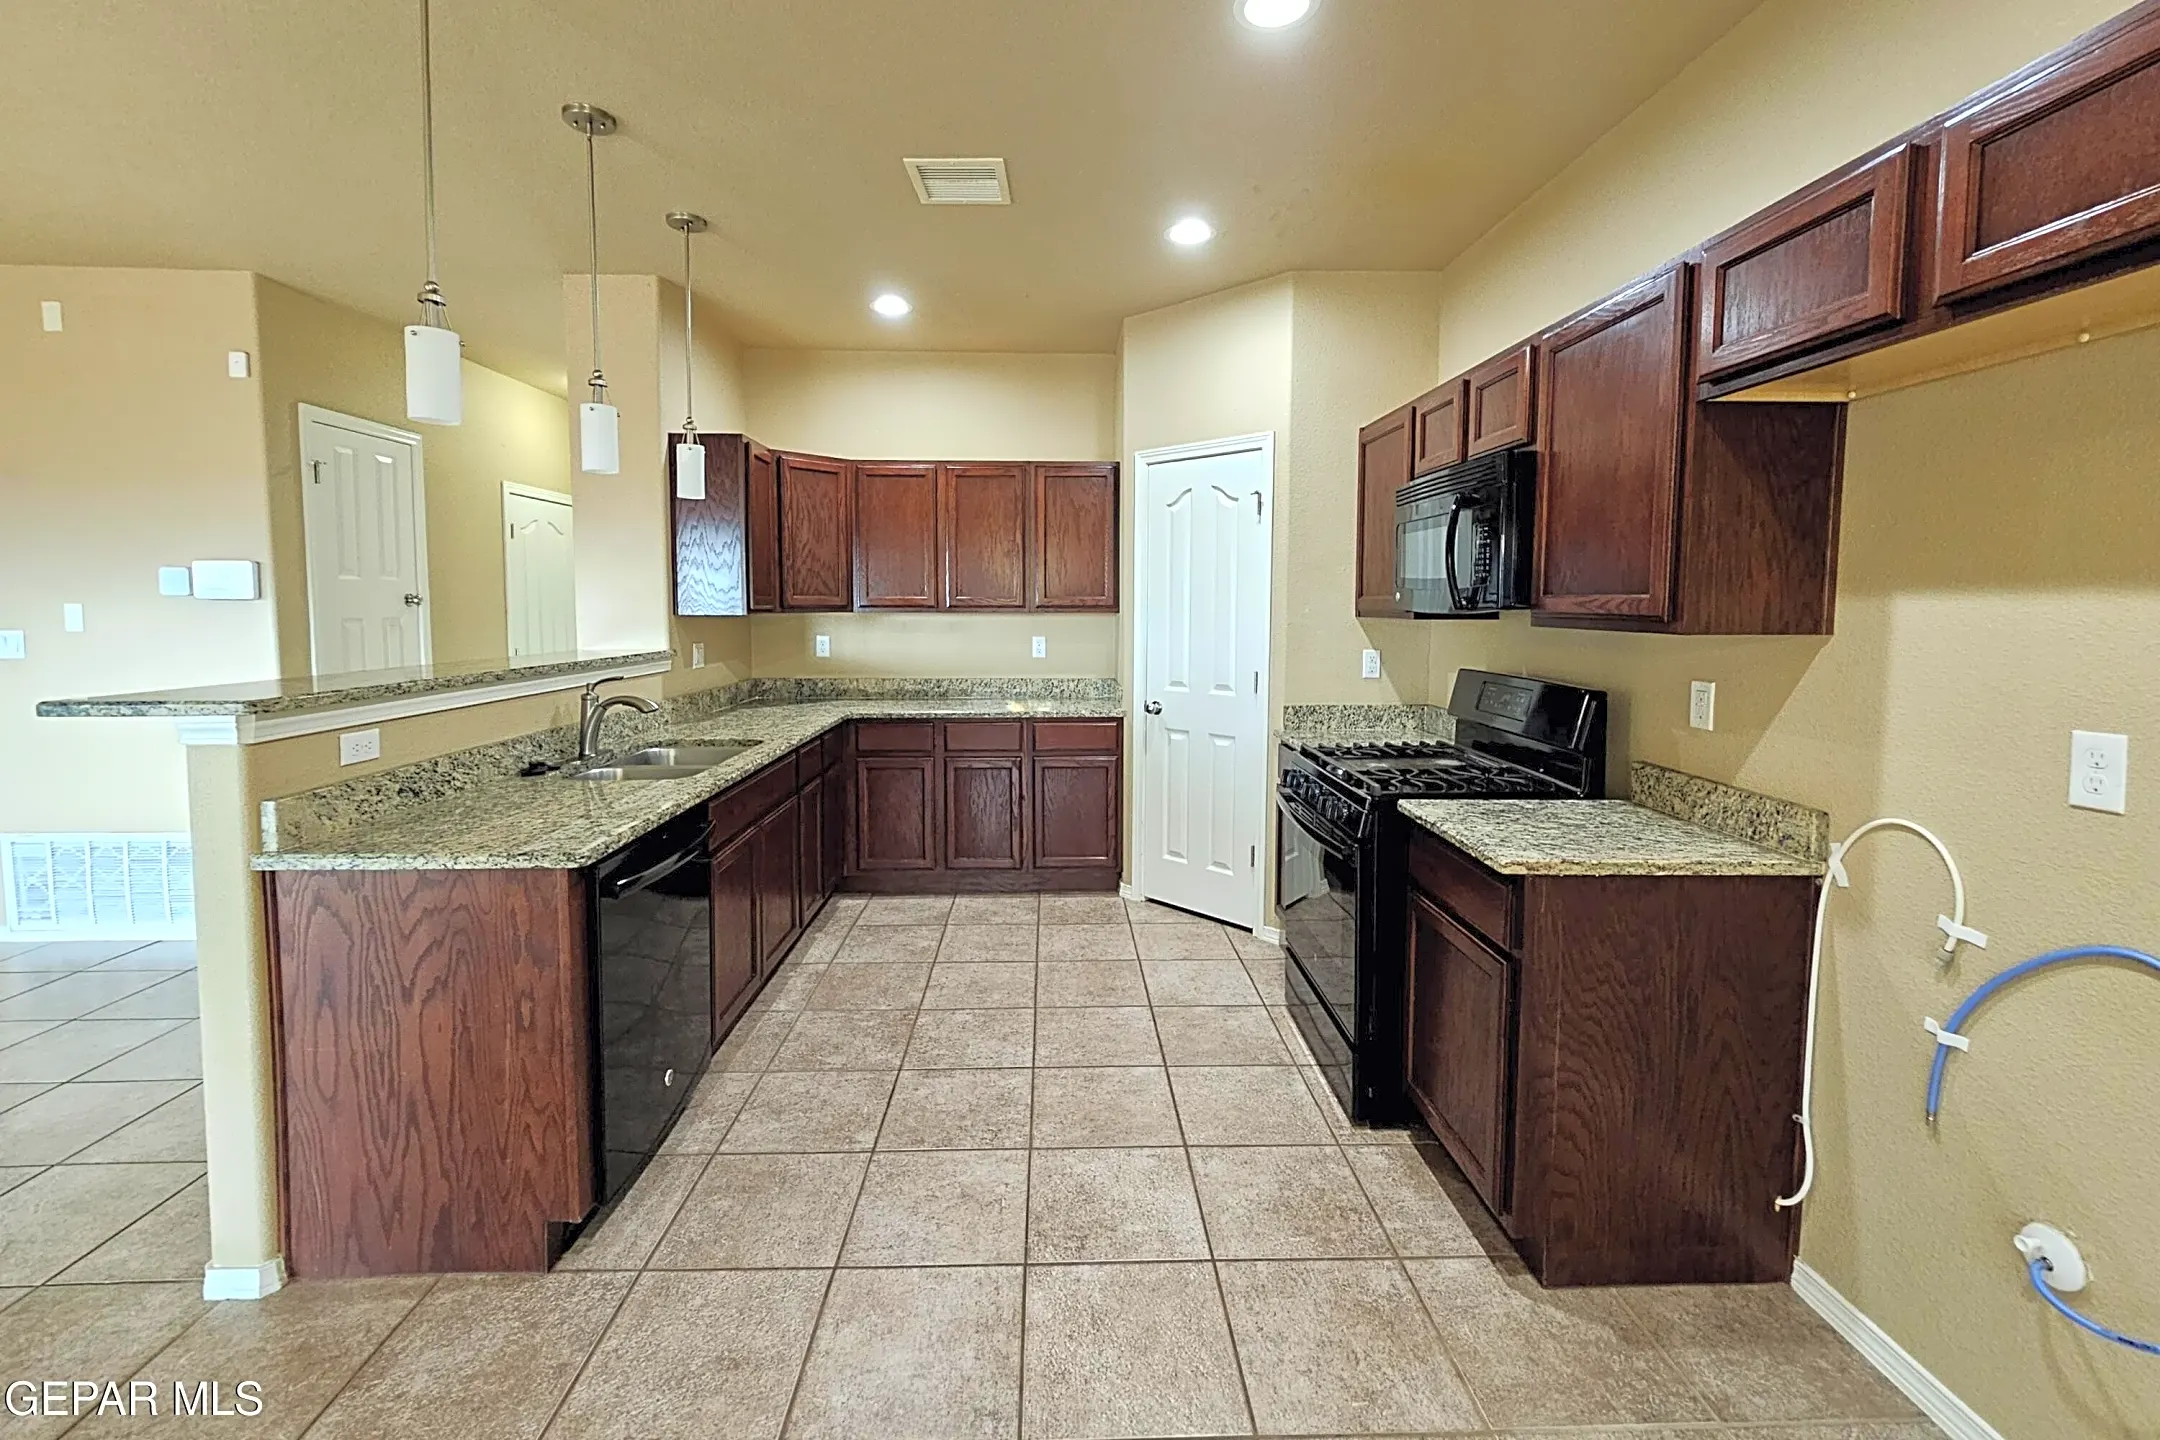 Kitchen - 12185 Copper Valley Ln - El Paso, TX